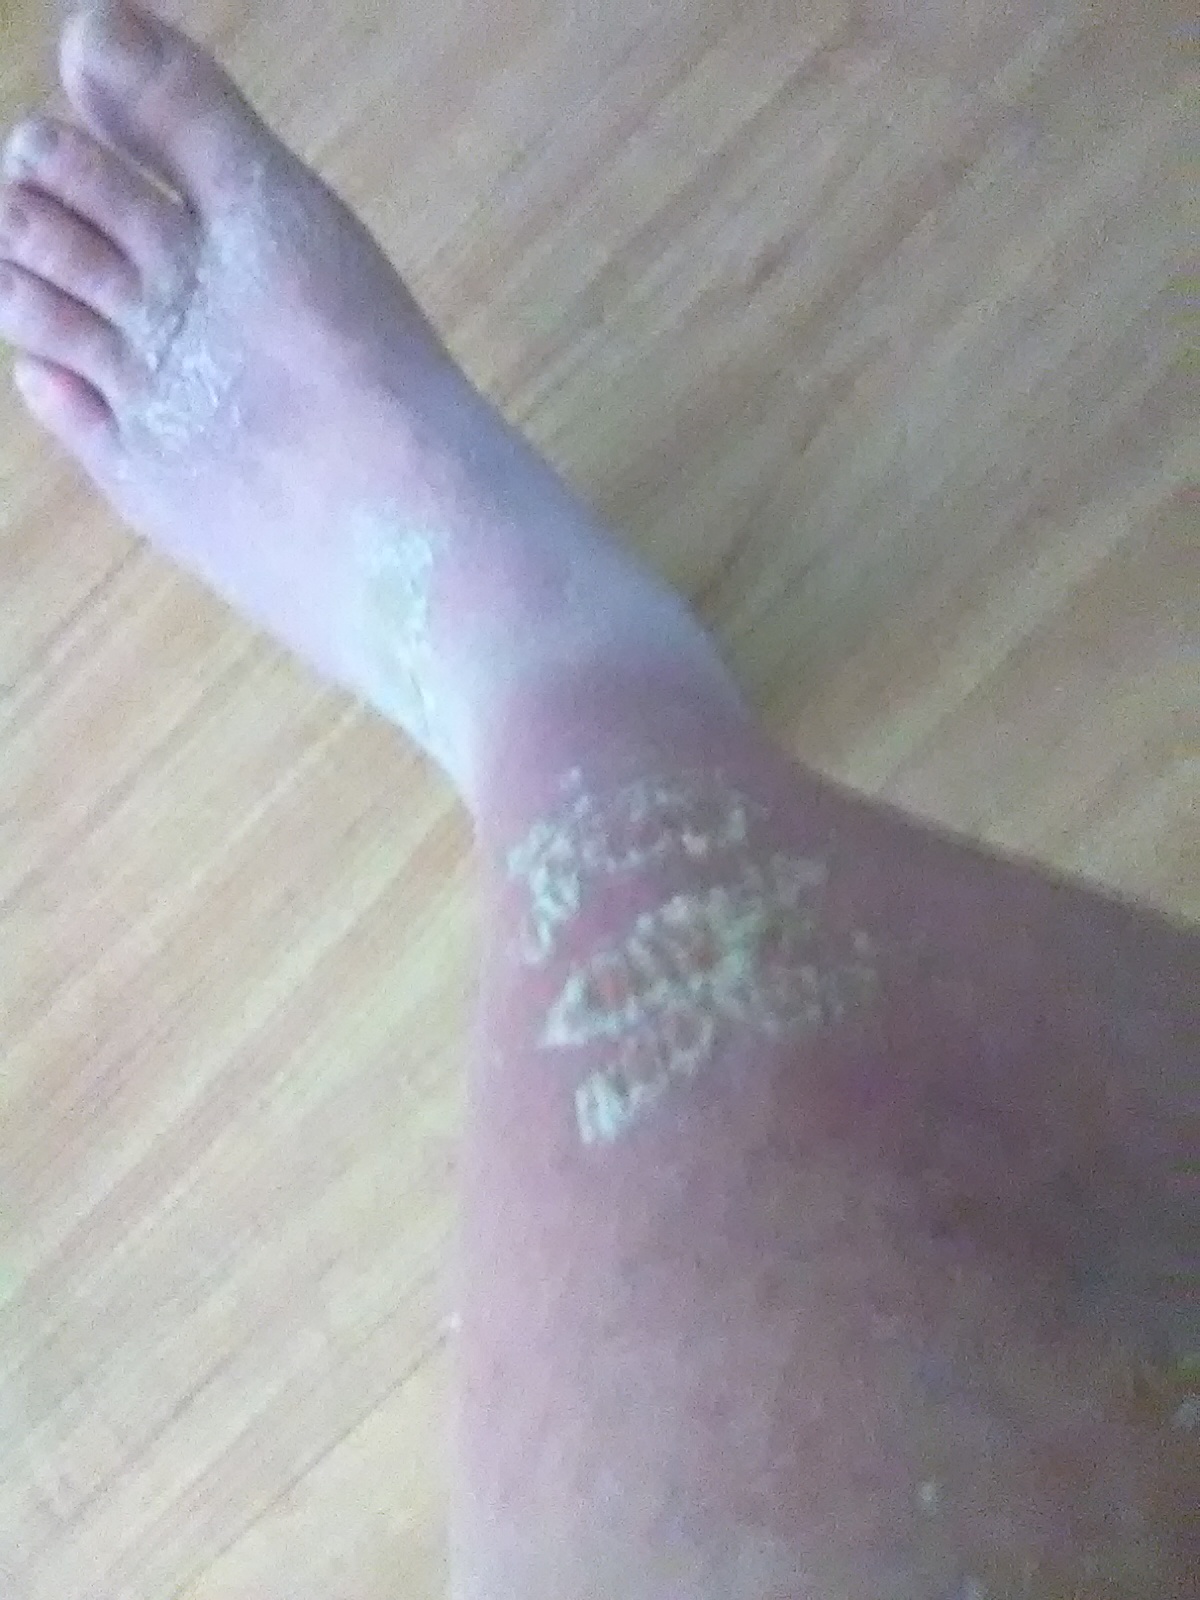 Chemical Burns From Horizon Milk On My Legs & Feet